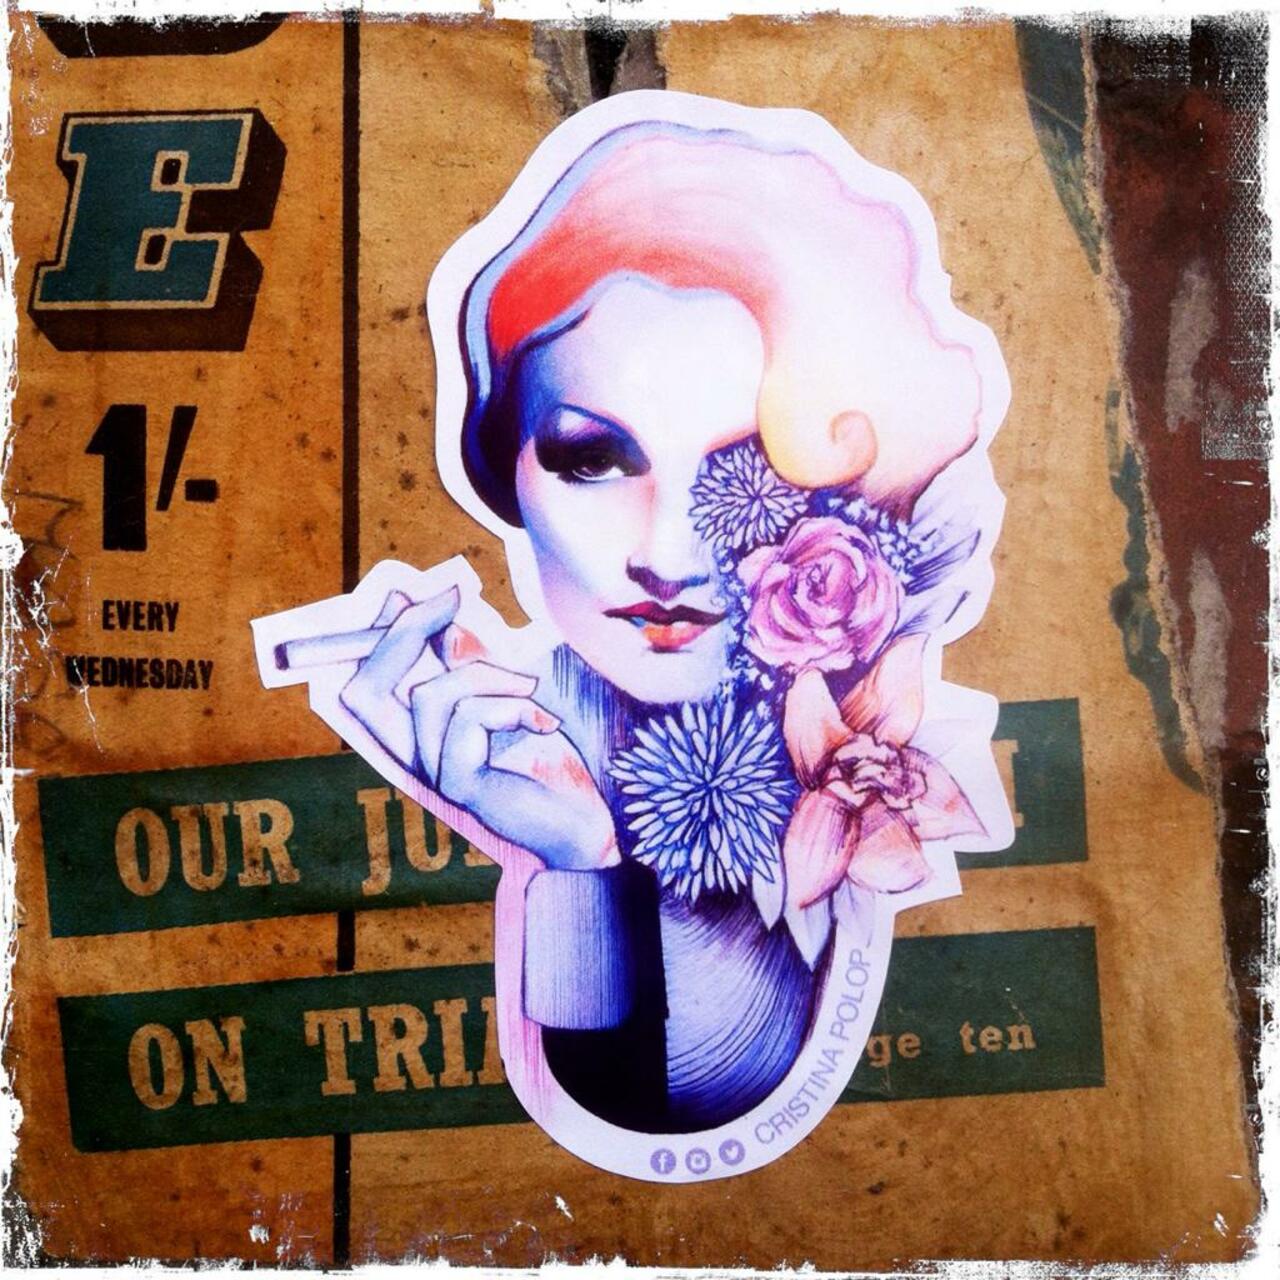 Little sticker from Christina Polop on Sclater Street #art #streetart #graffiti http://t.co/cGgYngKtWu